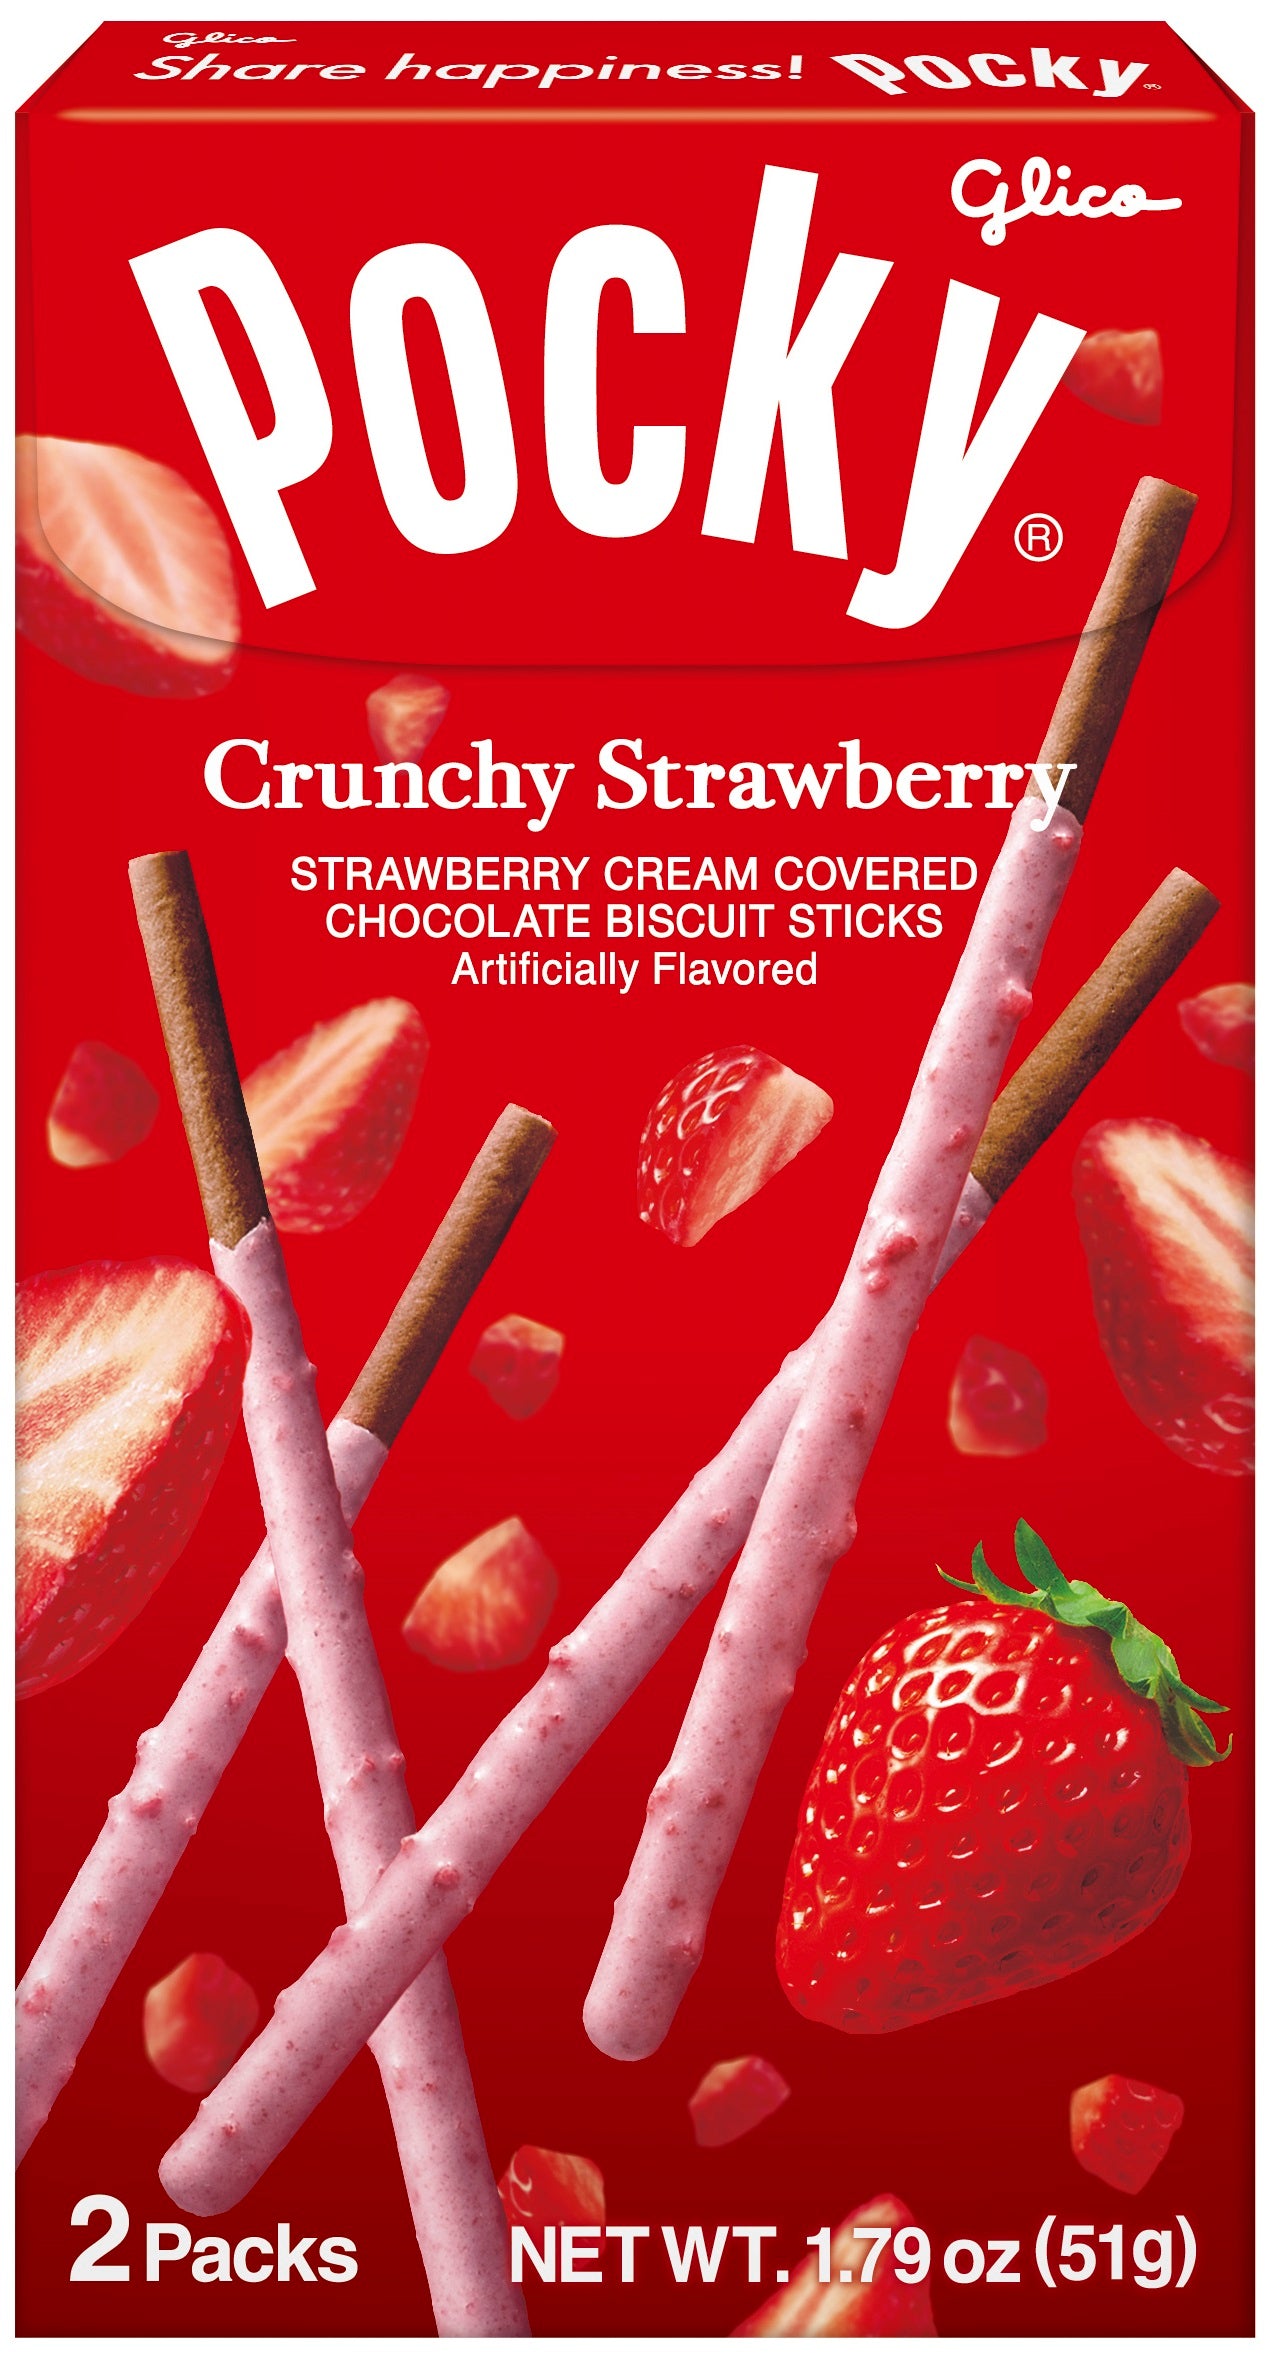 Pocky - Chocolate Strawberry Flavor